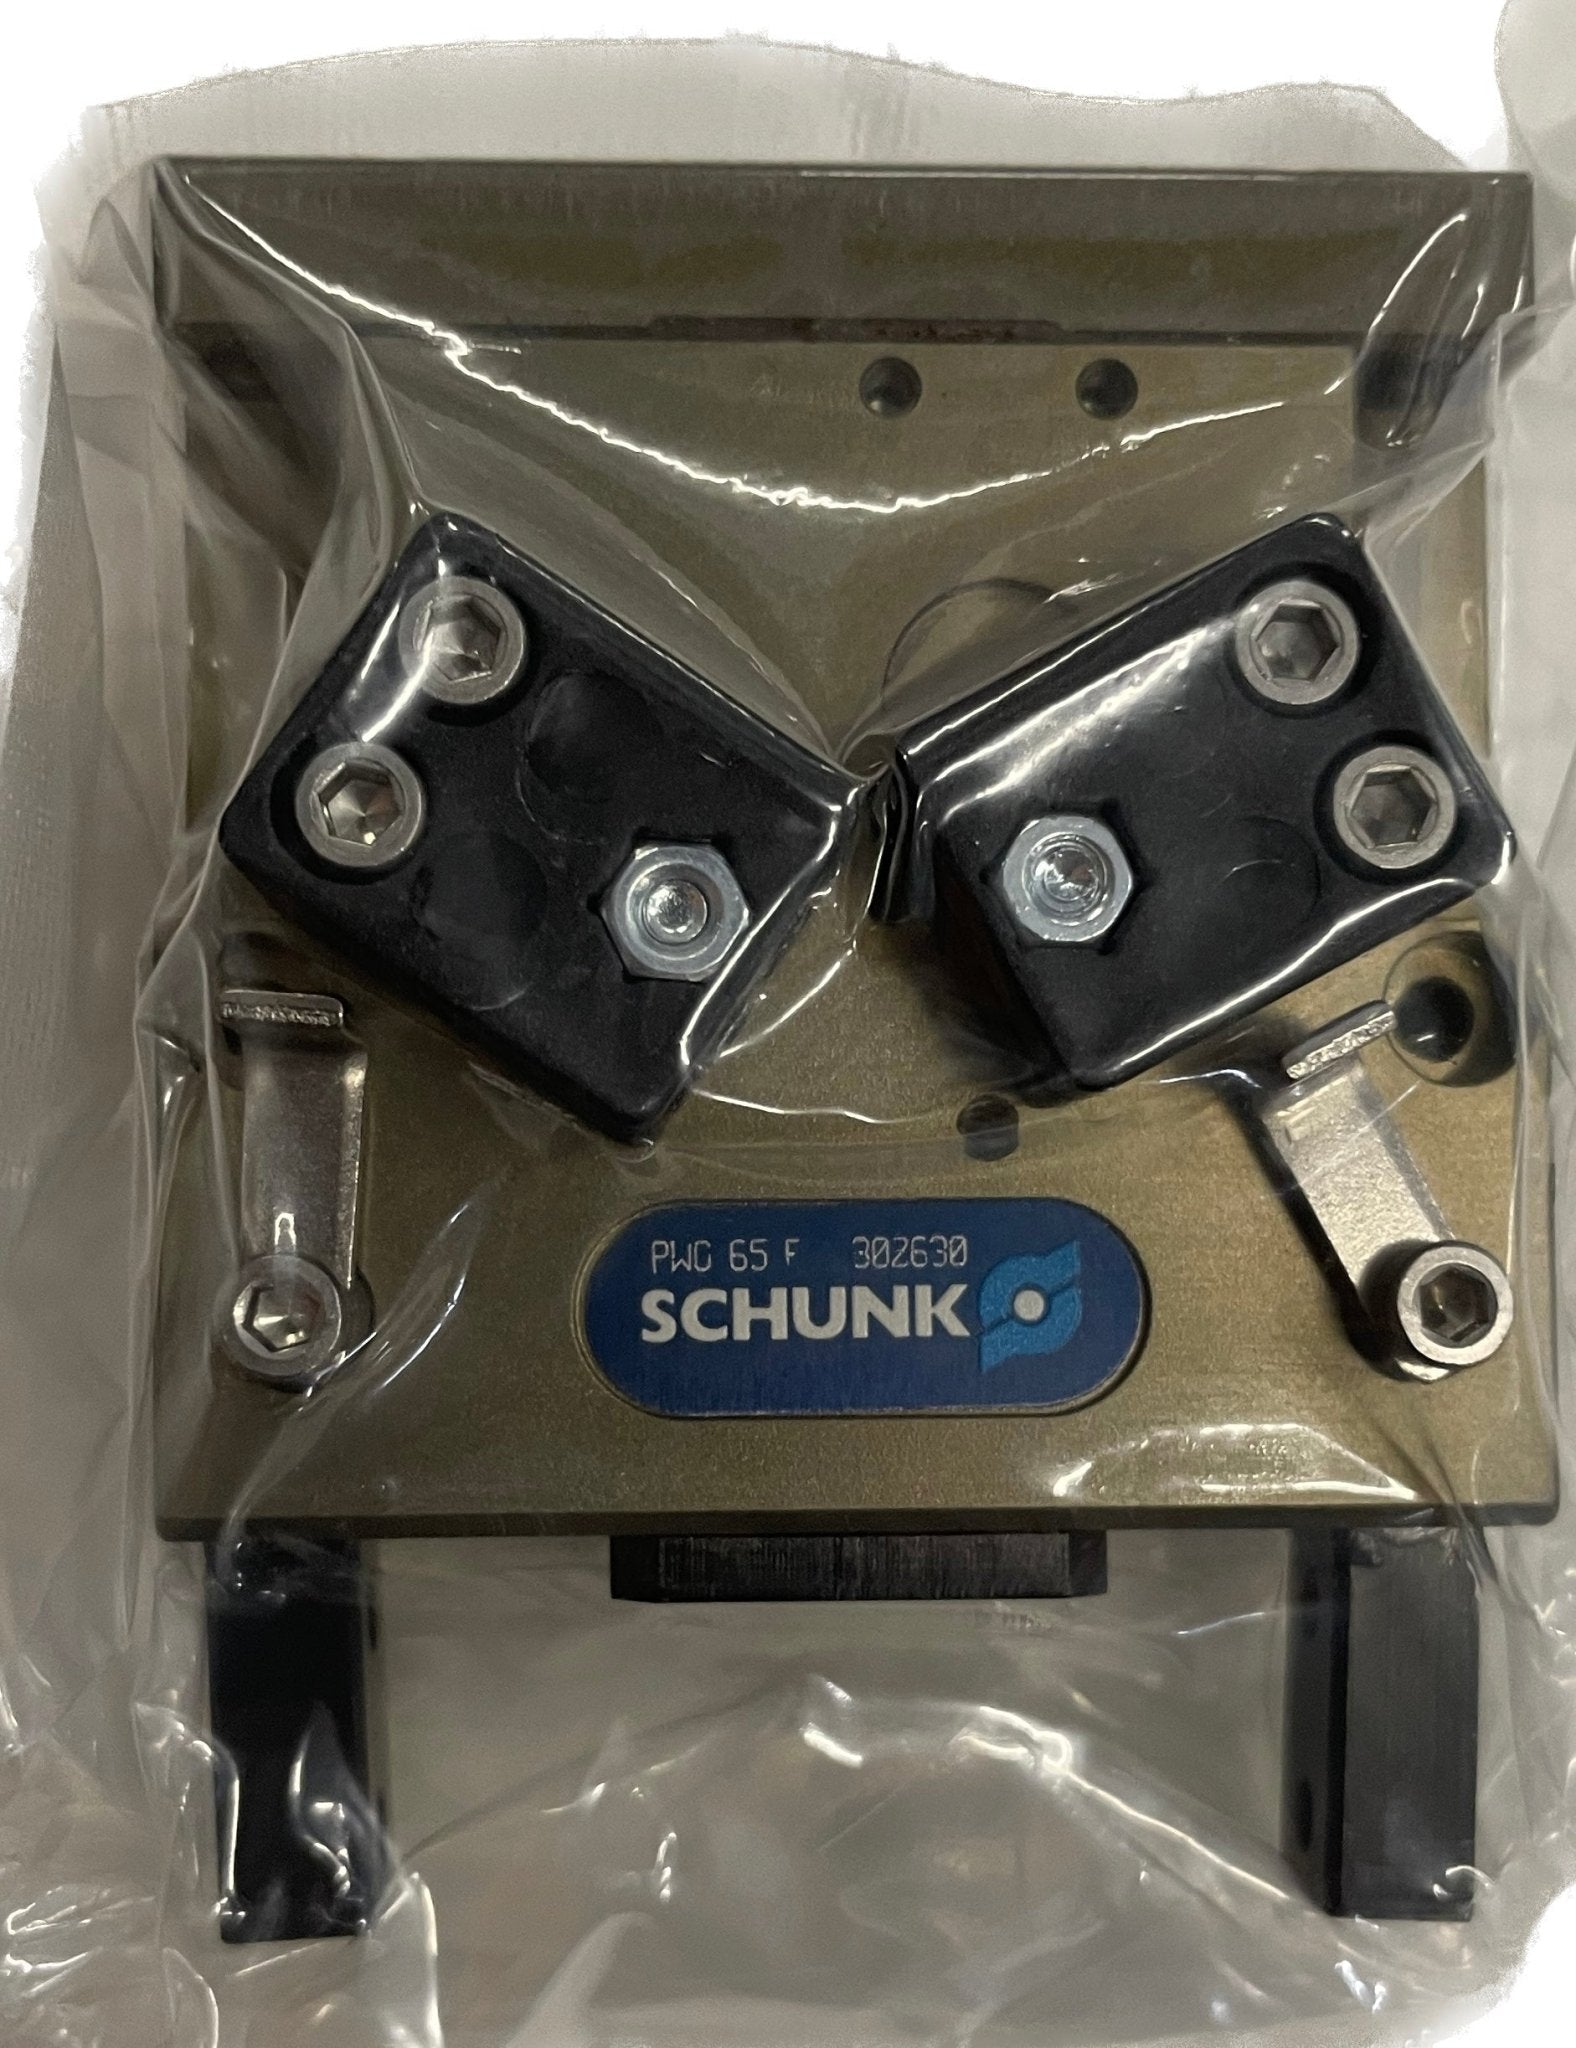 Schunk Winkelgreifer 302630 - #product_category# | Klenk Maschinenhandel